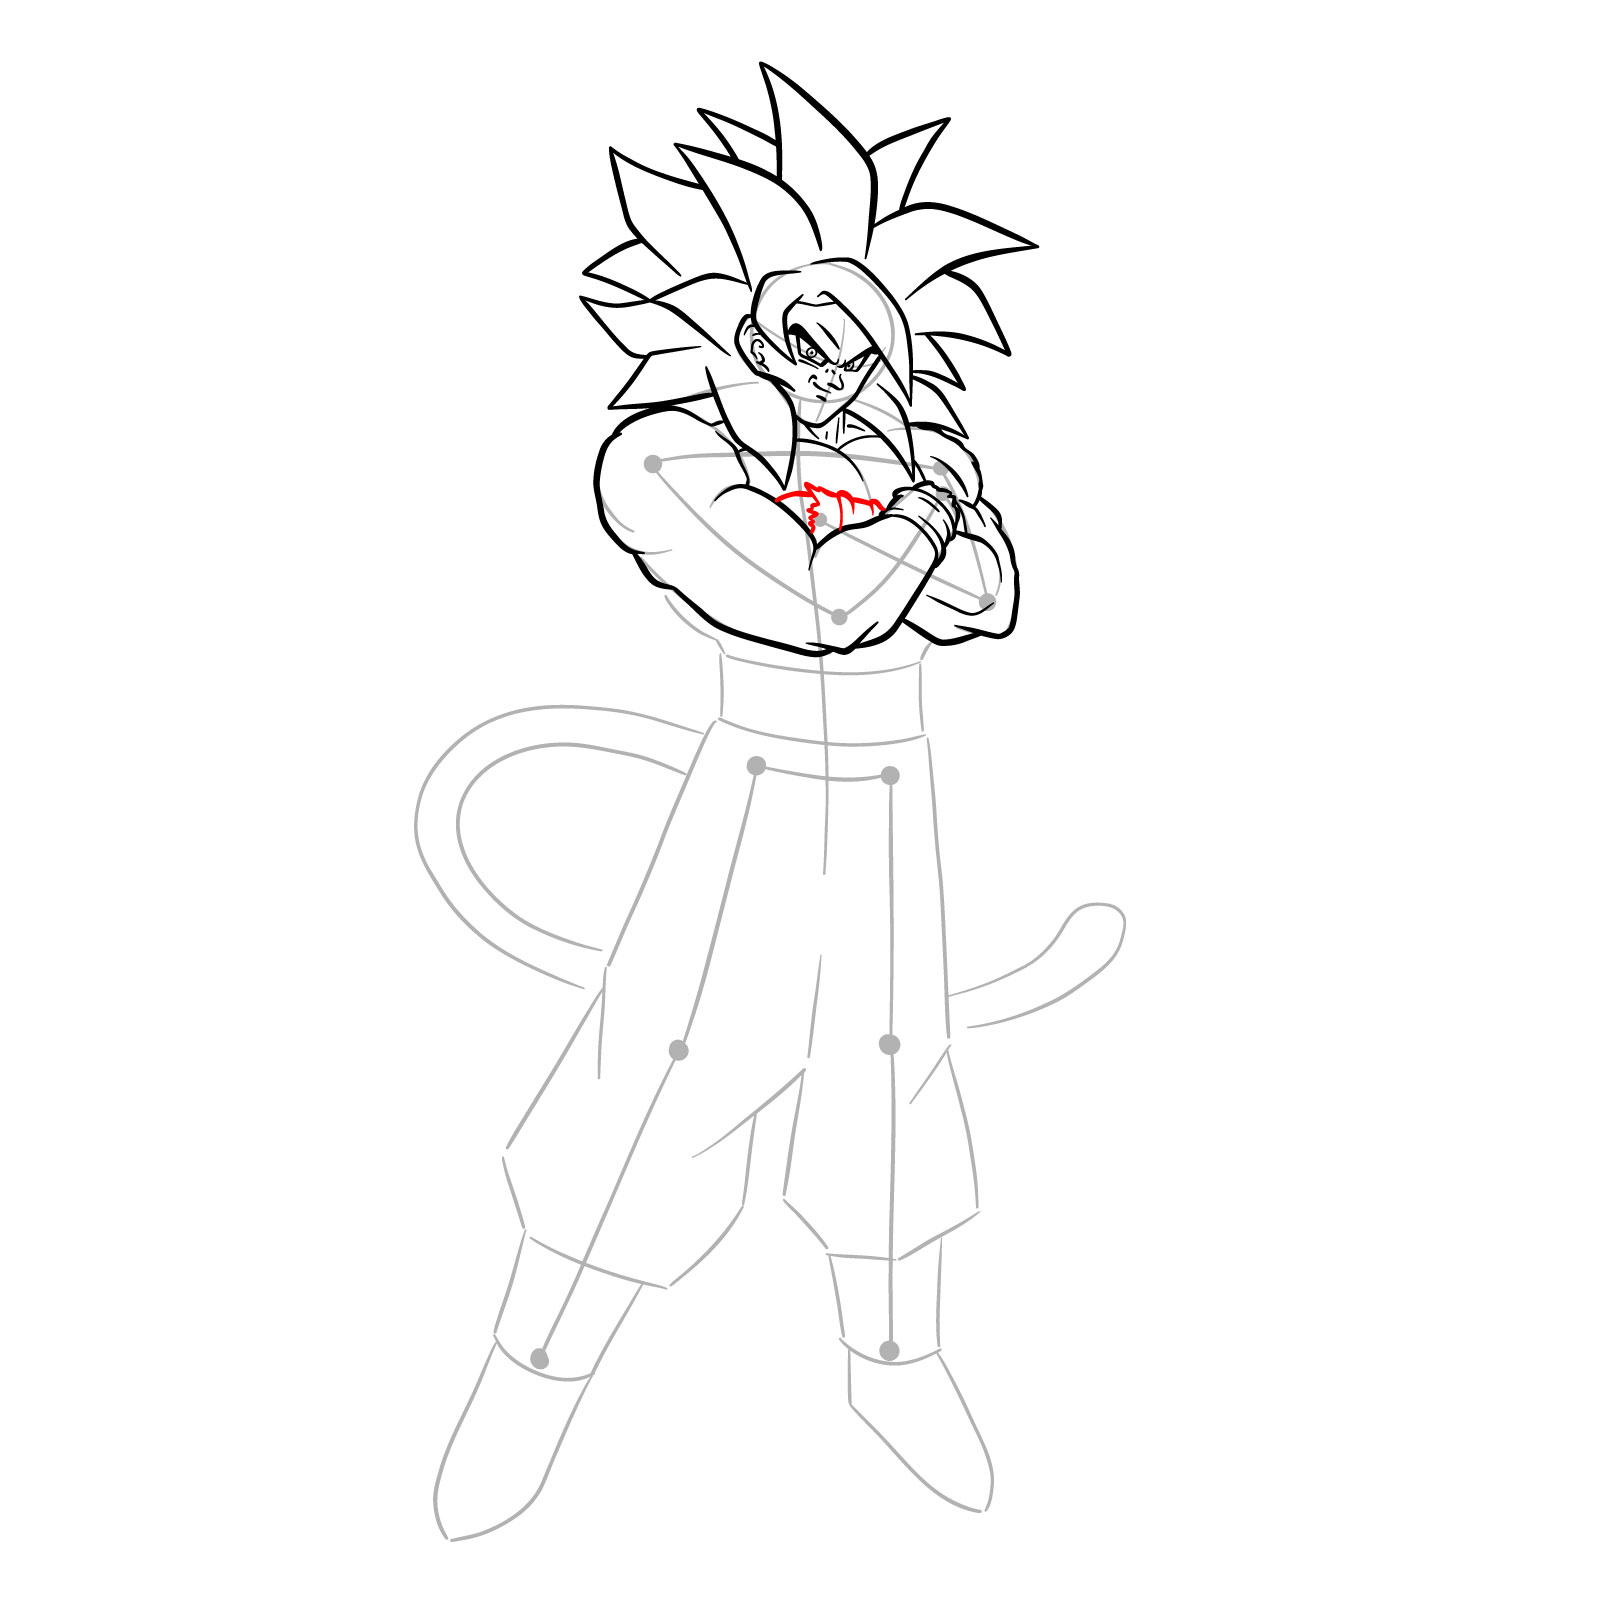 How to tát draw Goku Super Saiyan 4 - step 20